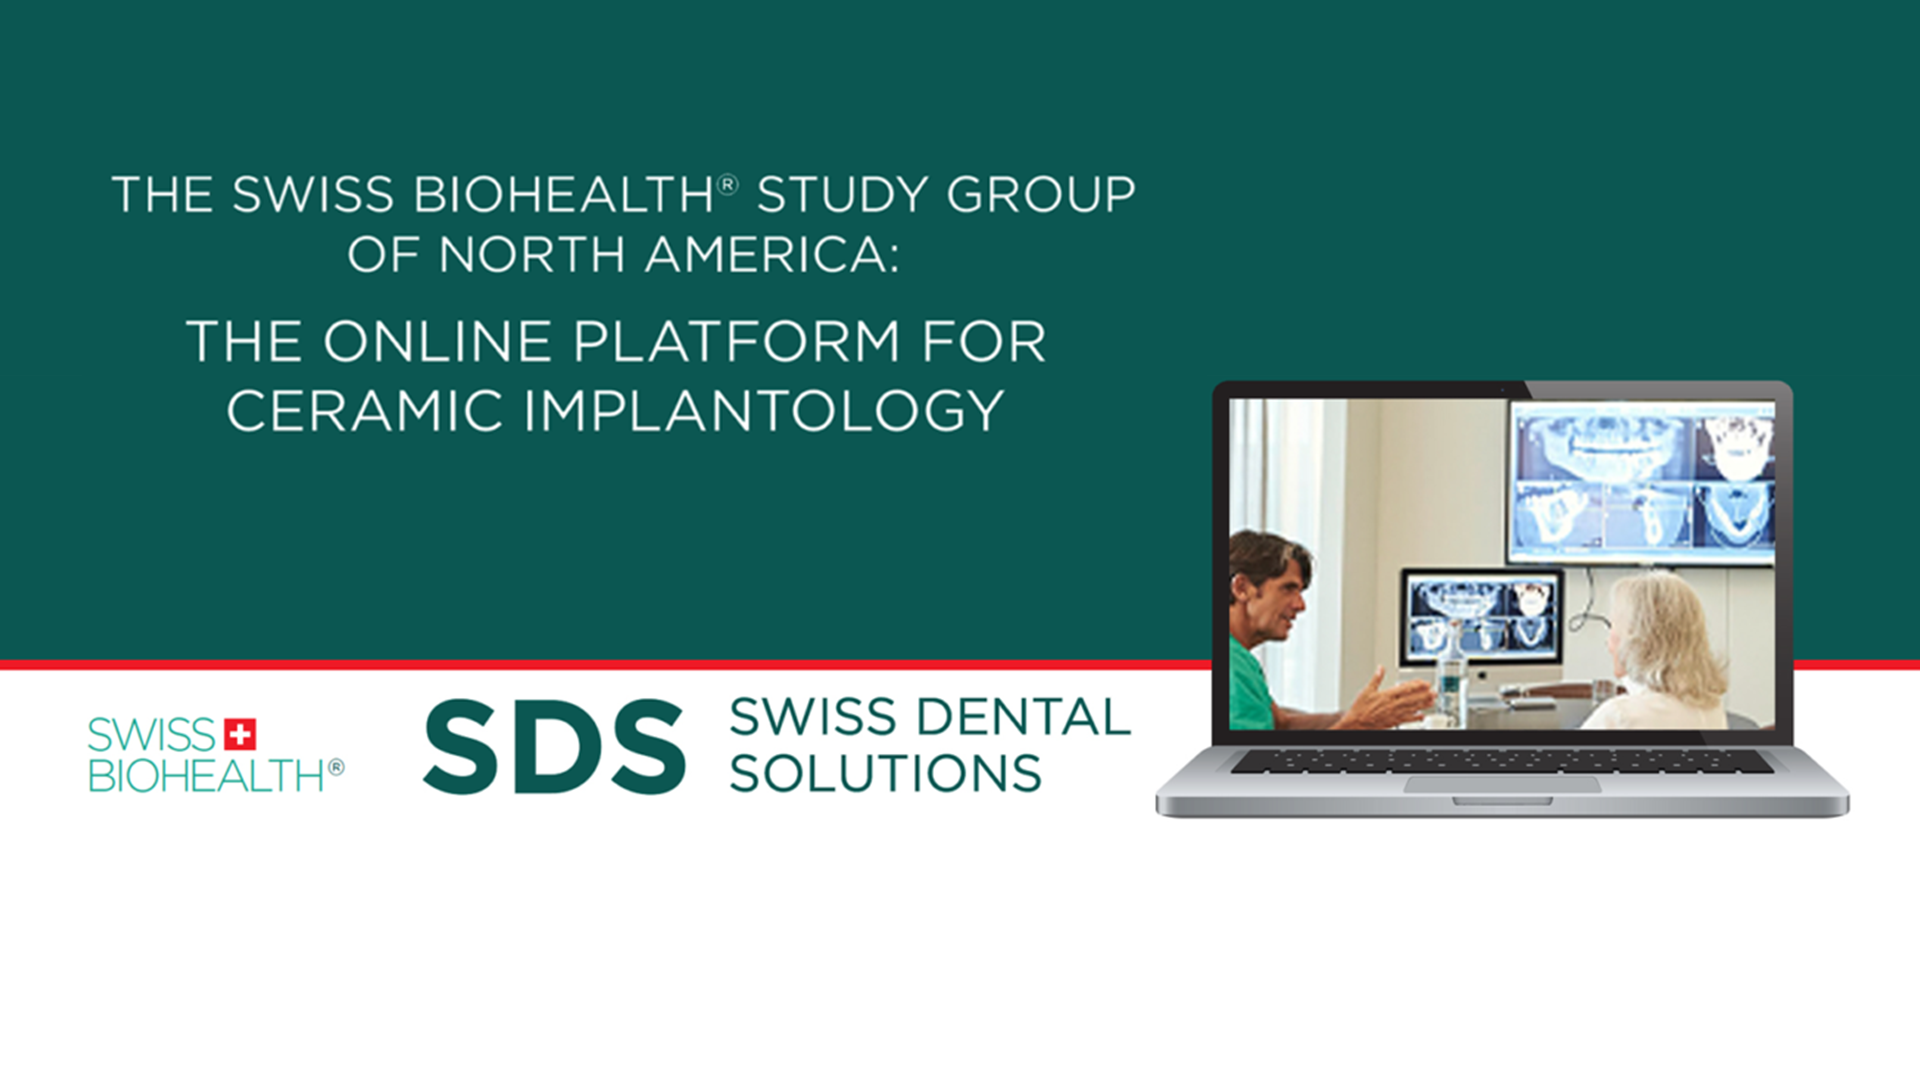 The Swiss Biohealth Study Group of North America